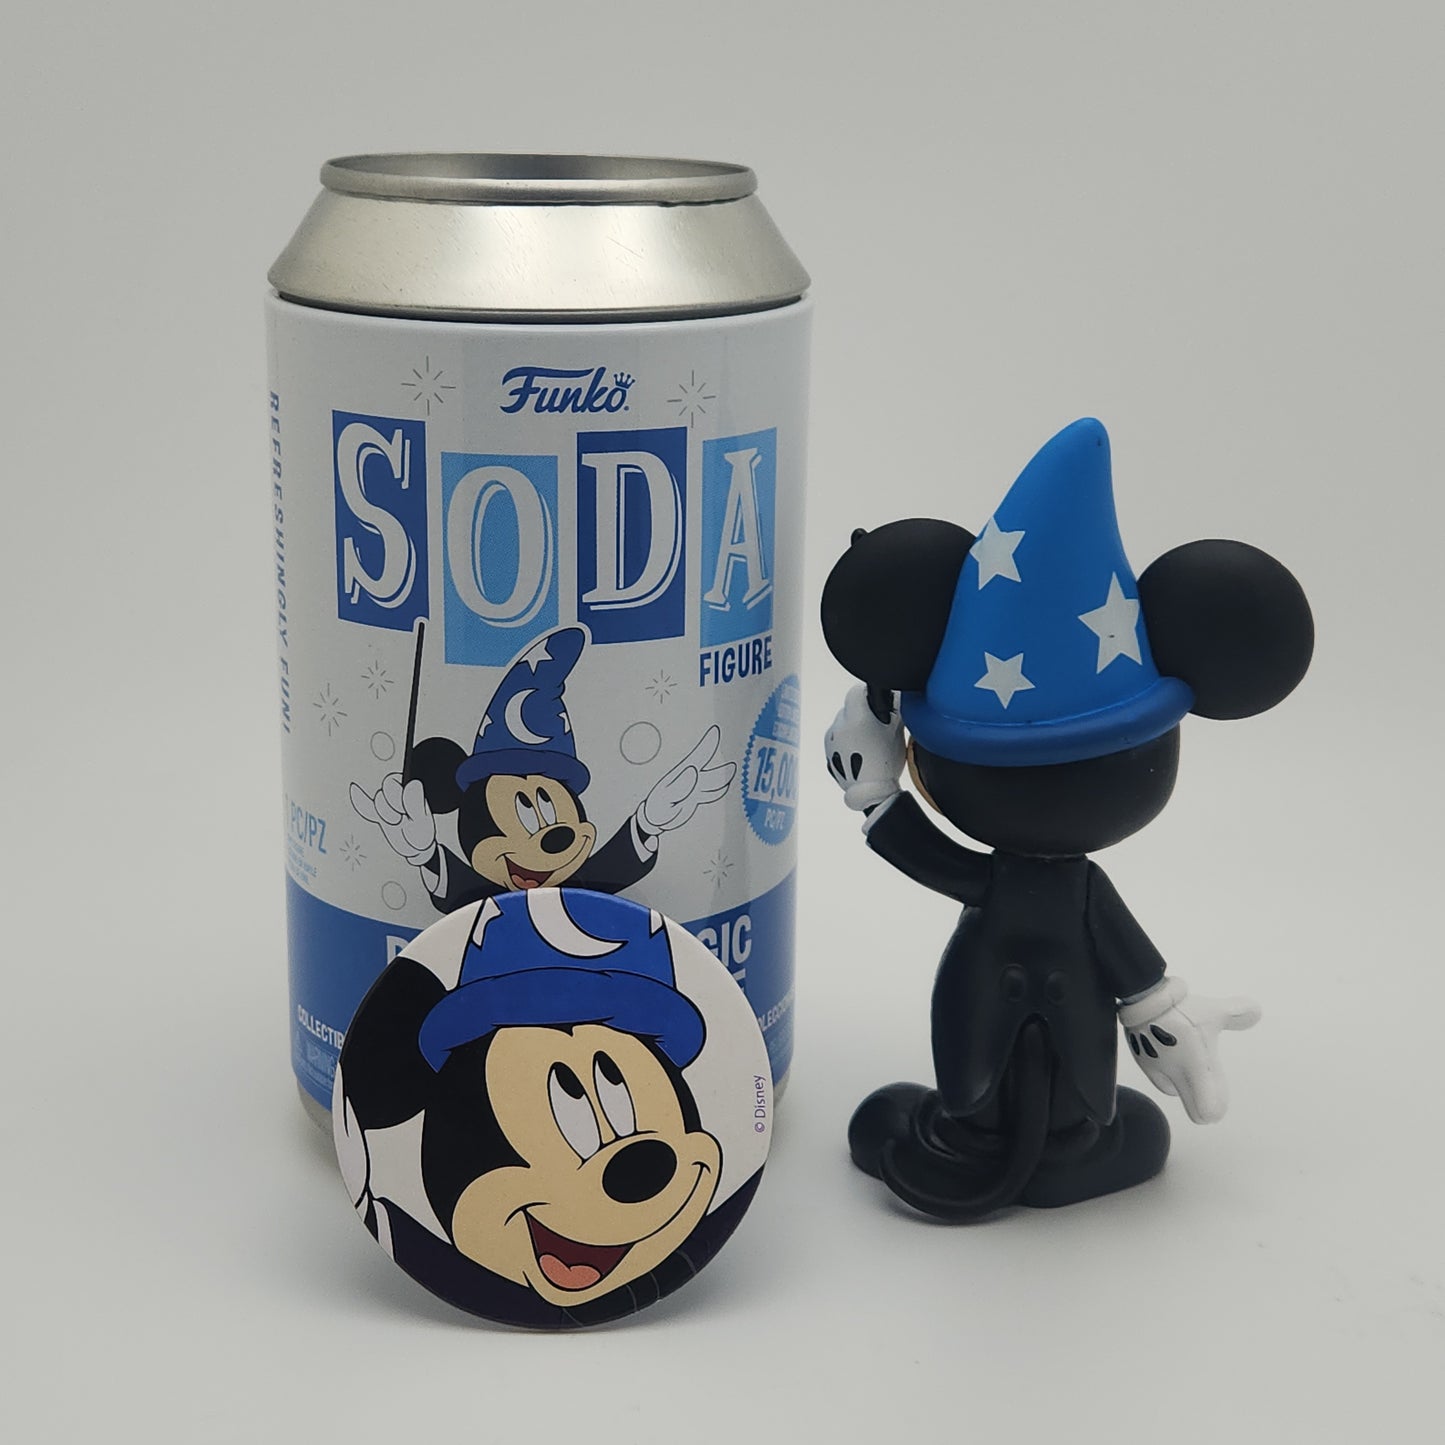 Funko Soda- Philharmagic Mickey Mouse